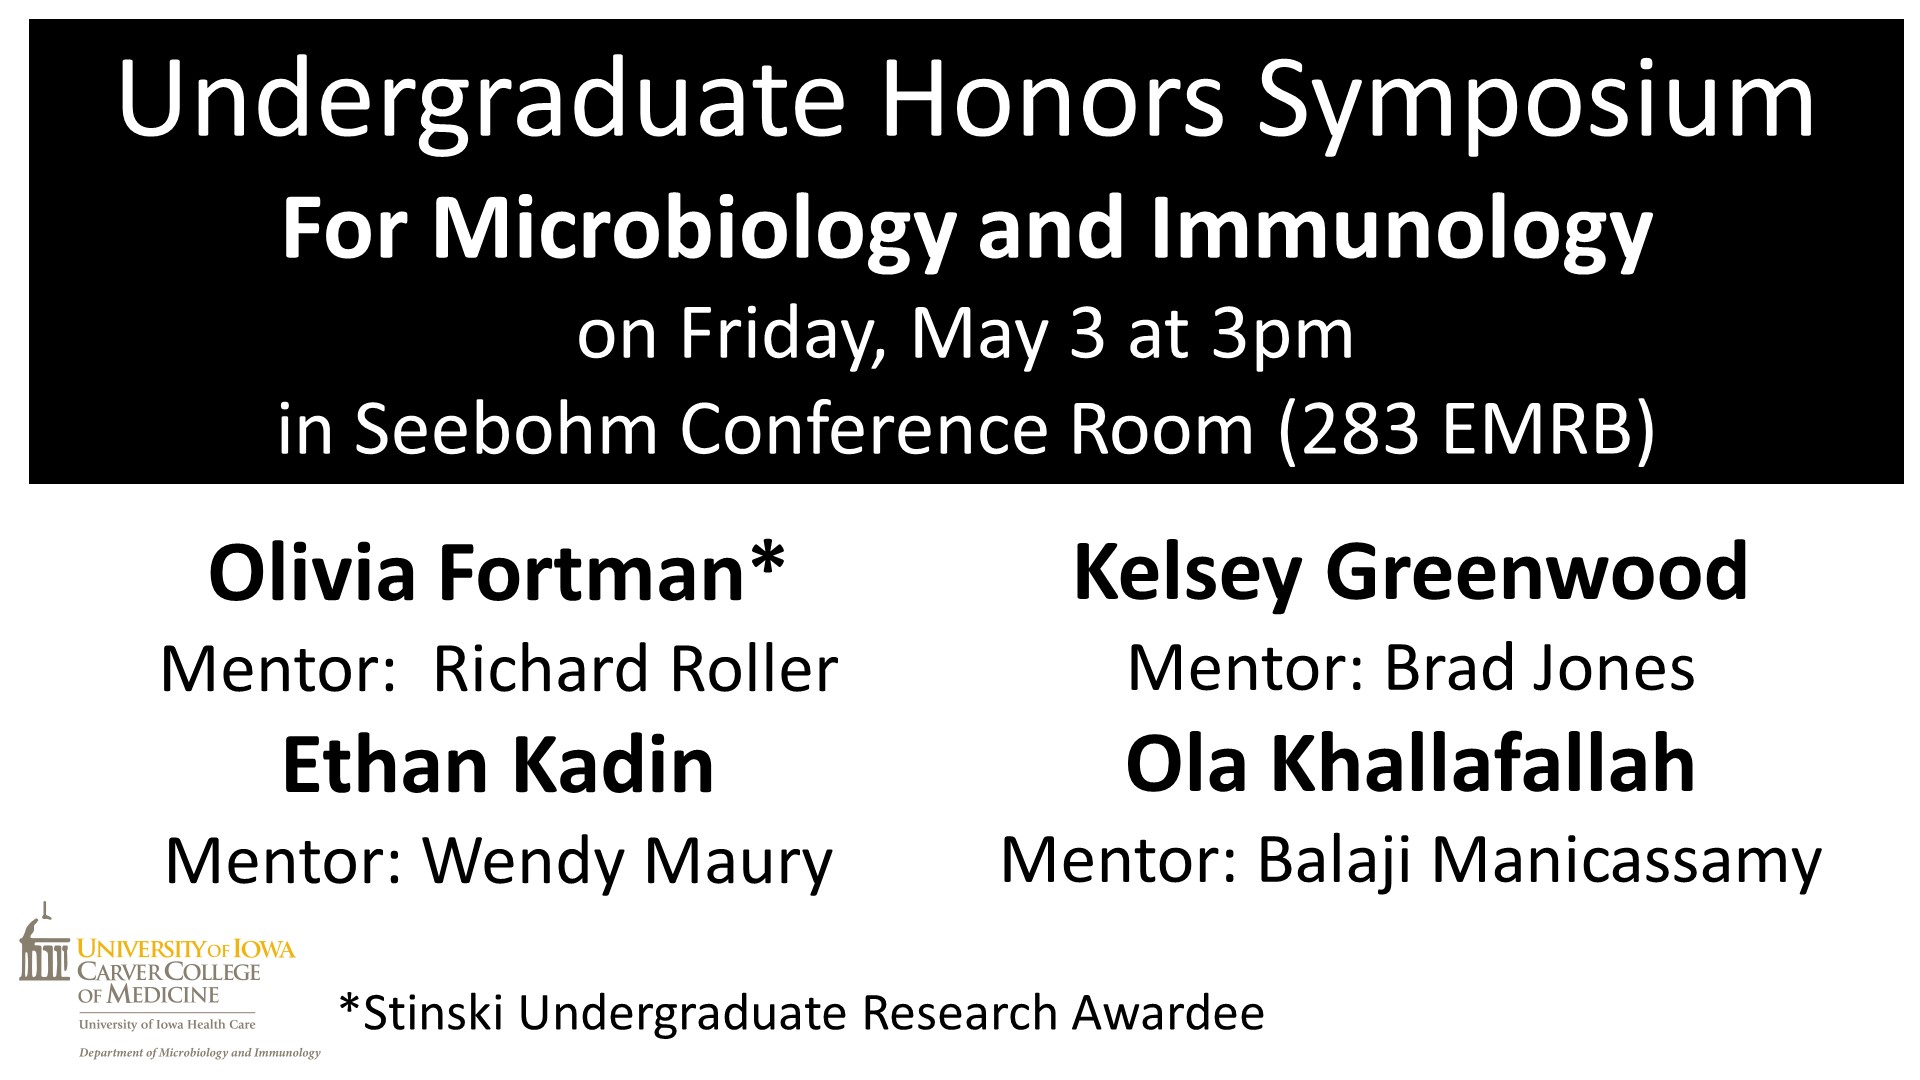 Microbiology and Immunology Undergraduate Honors Symposium promotional image